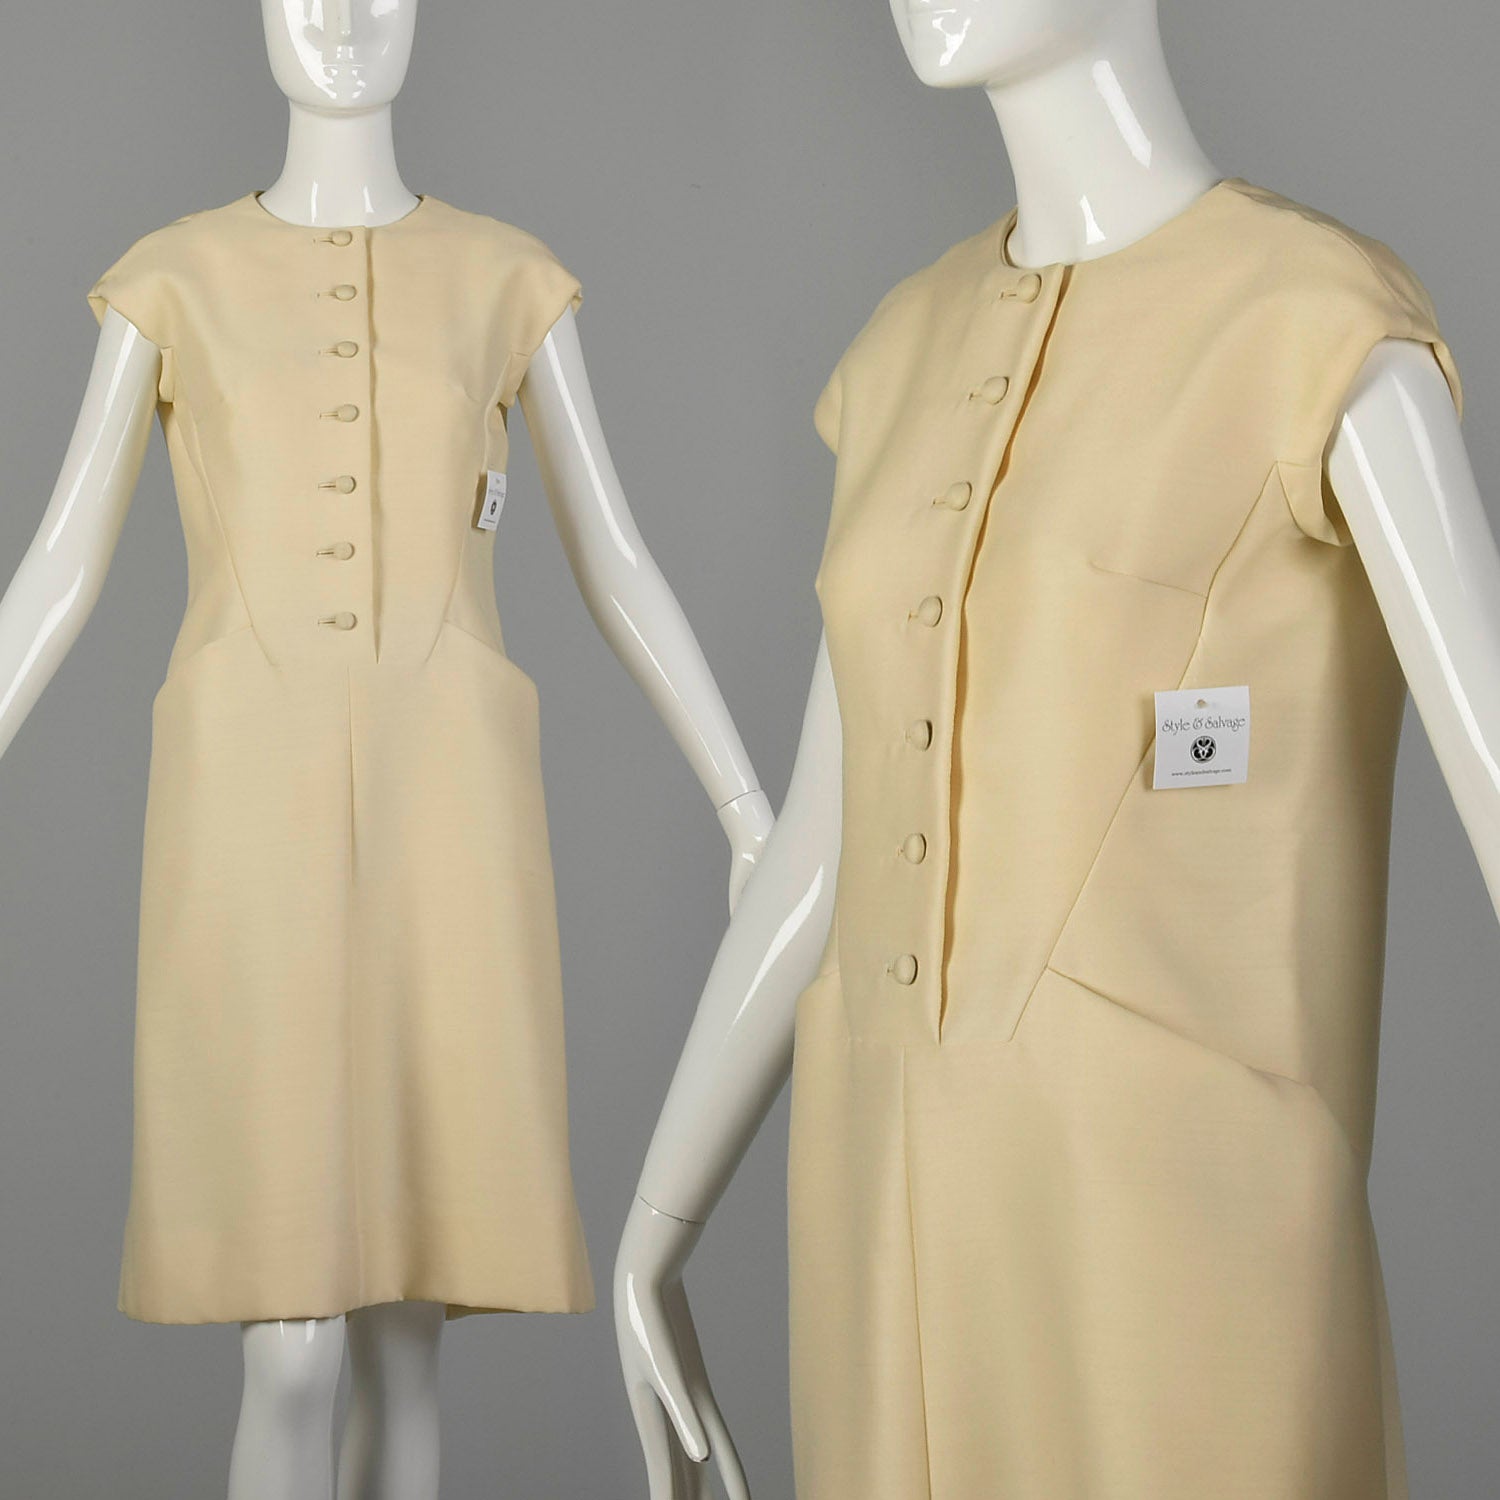 Medium 1960s Dress Suzy Perette Cream Wool Silk Sack Dress